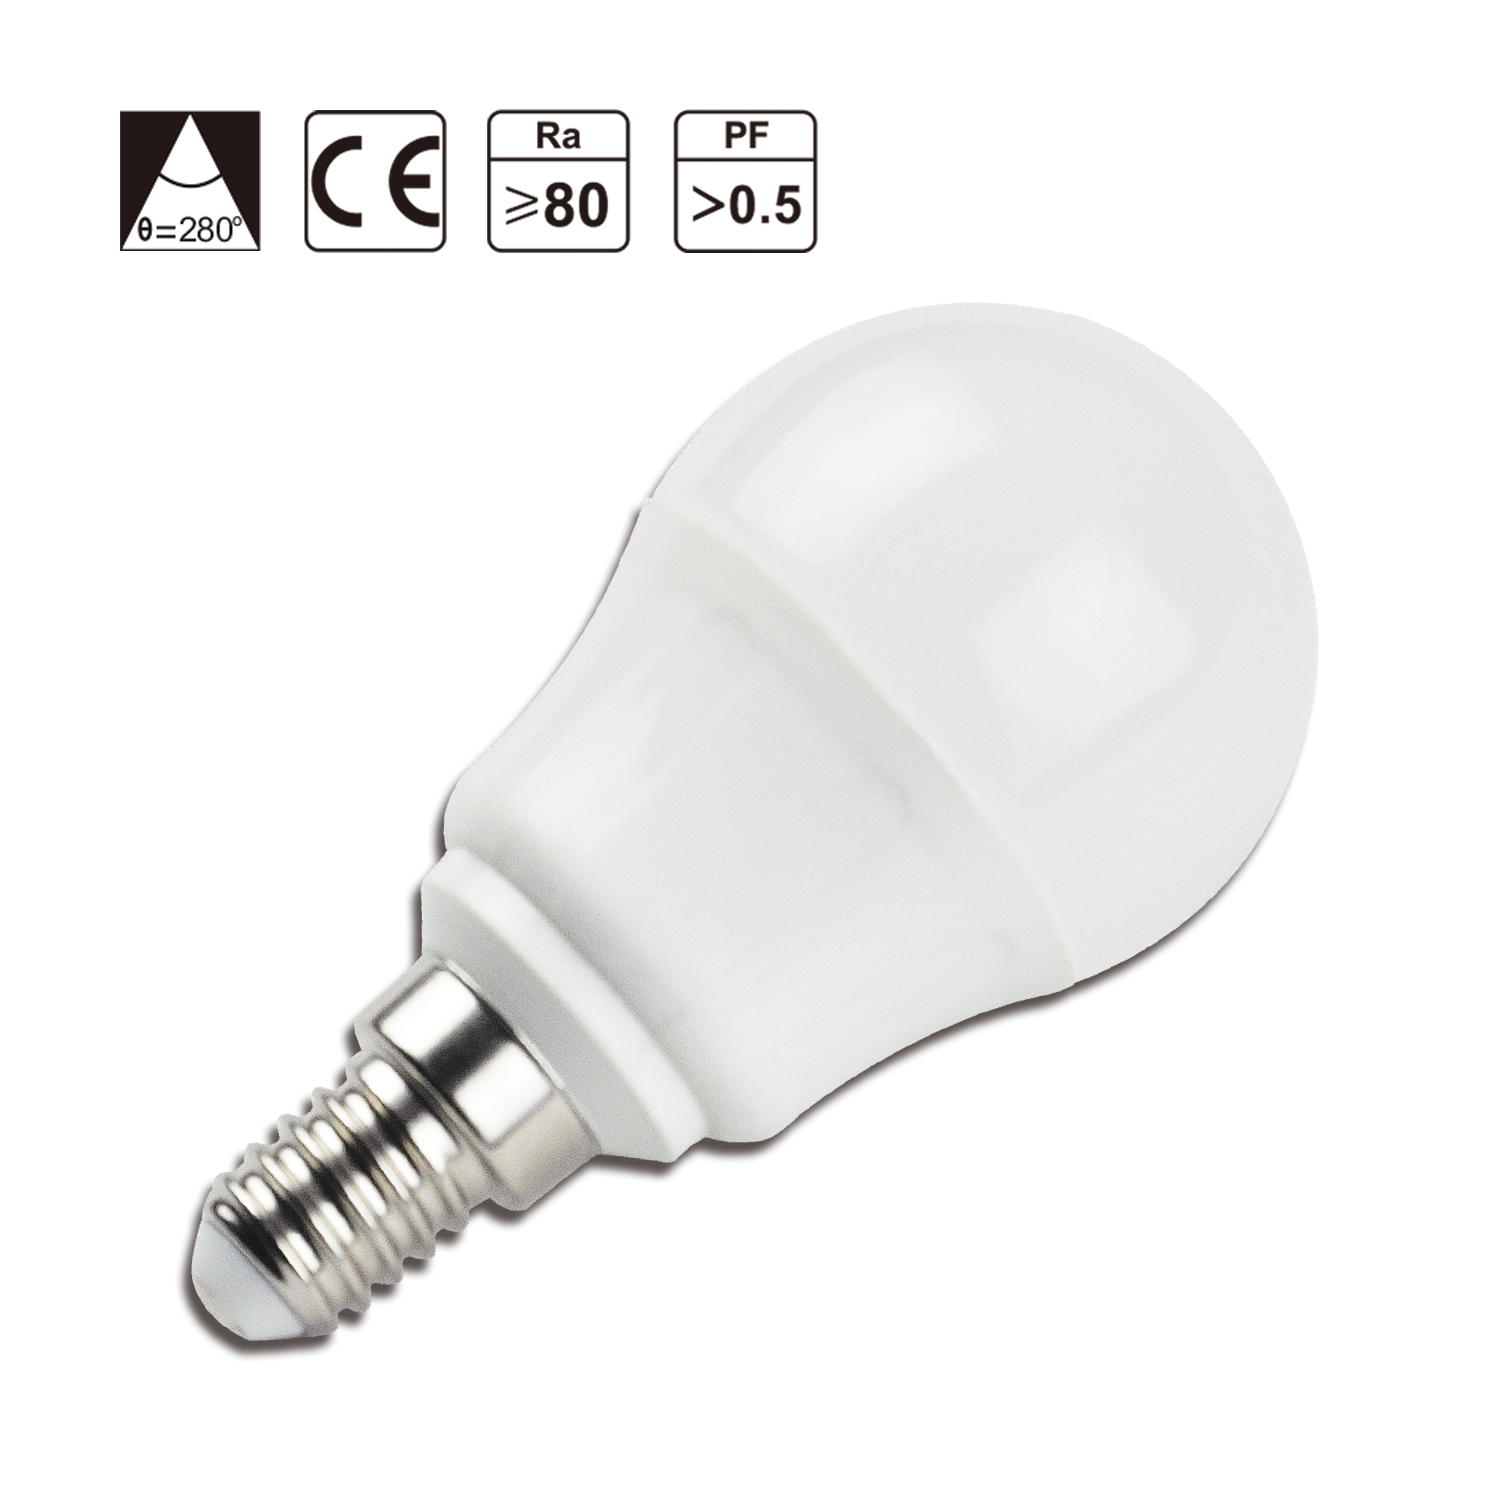 de 6 W Aigostar casquillo delgado E14 y luz blanca 6400K Clase de eficiencia energética A+ pack de 5 Bombilla LED G45 big angle 